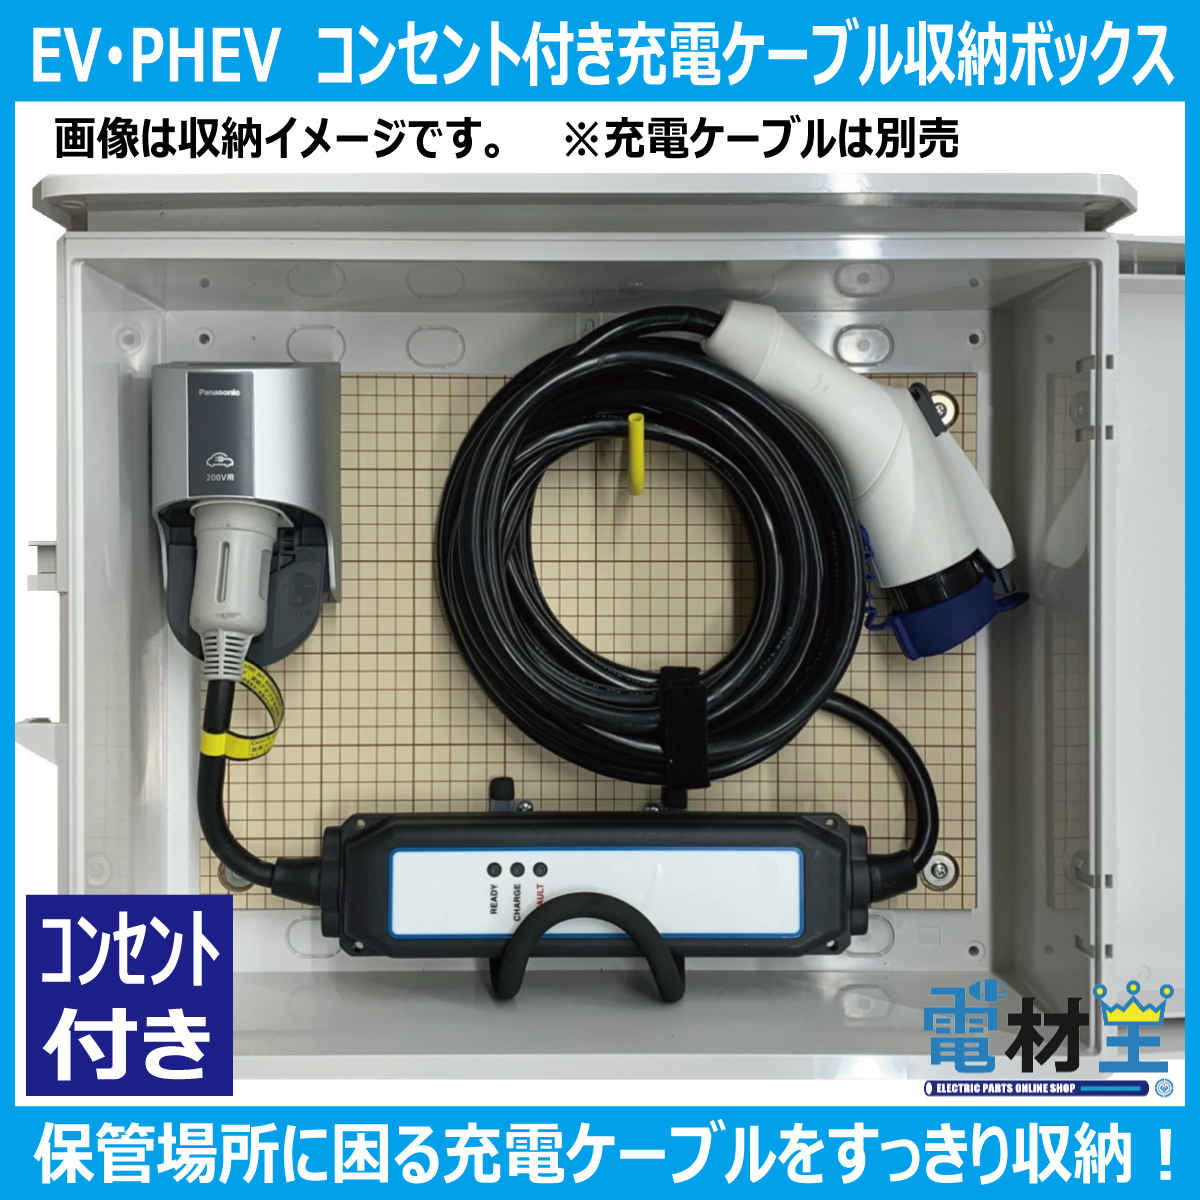 EV・PHEV用 充電ケーブル・コンセント収納ボックス コンセント付 電材王オリジナル品